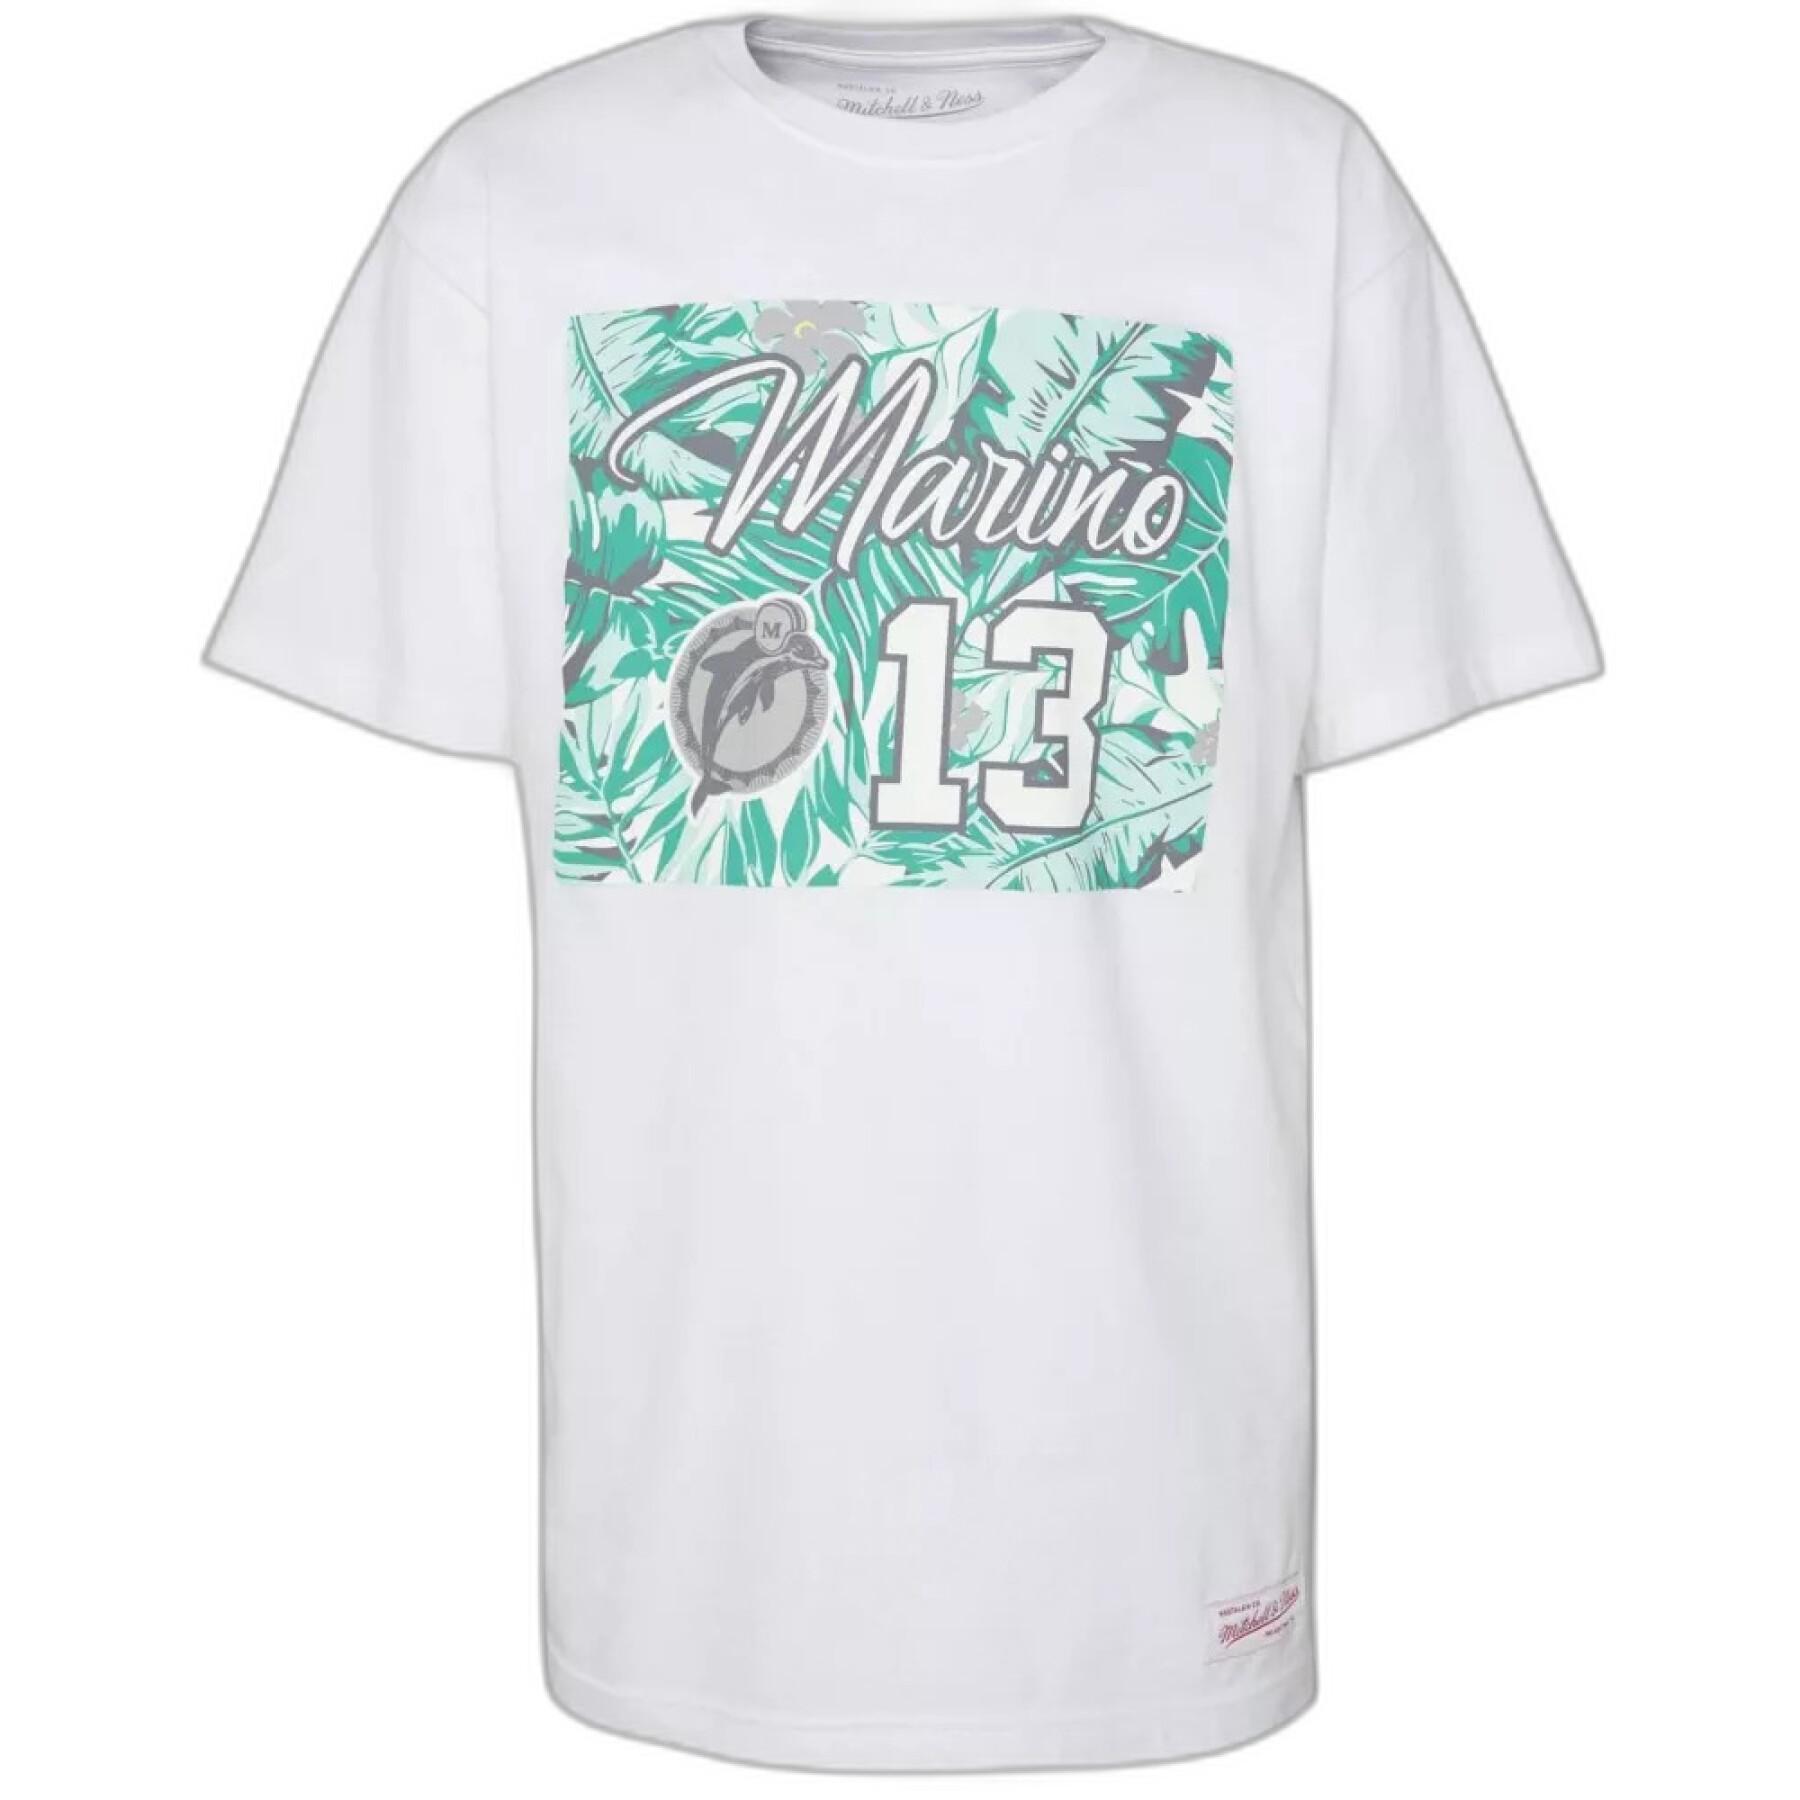 T-shirt Miami Dolphins pro-bowl tropical player Dan Marino